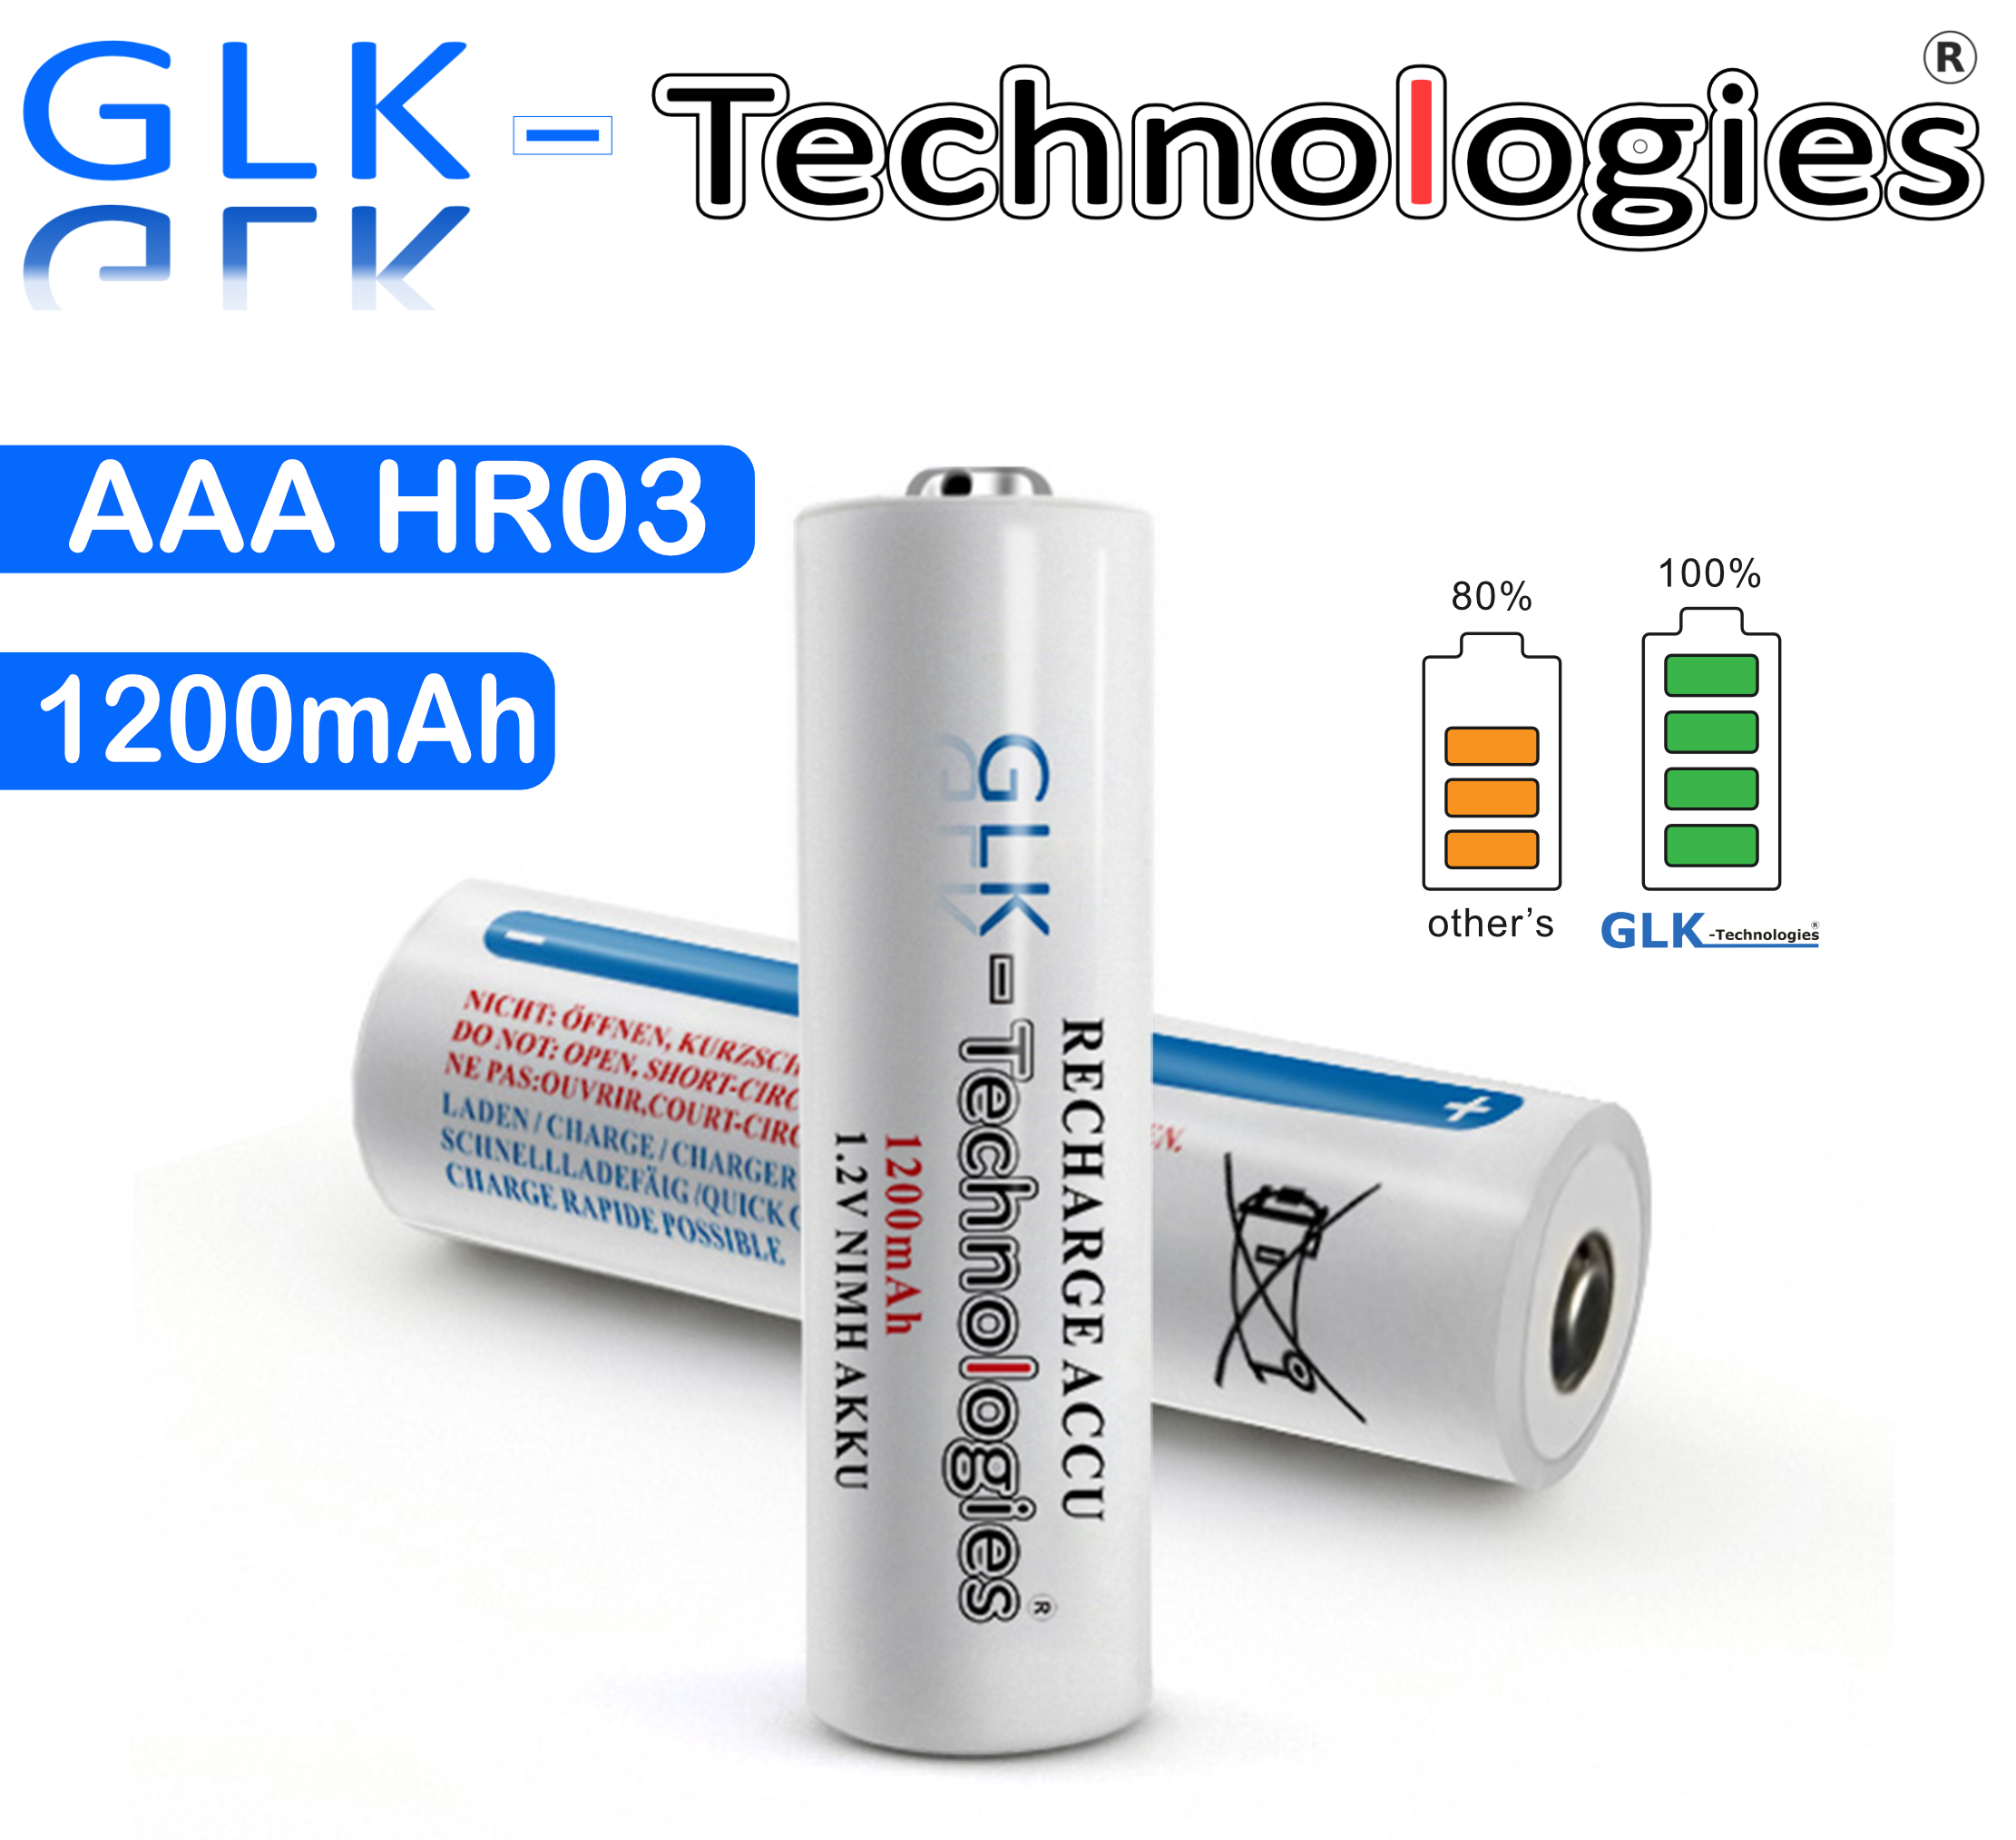 GLK-TECHNOLOGIES AAA HR03 1200mAh Ni-MH AAA Ladegerät wiederaufladbar Inklusive Akku, Ni-MH